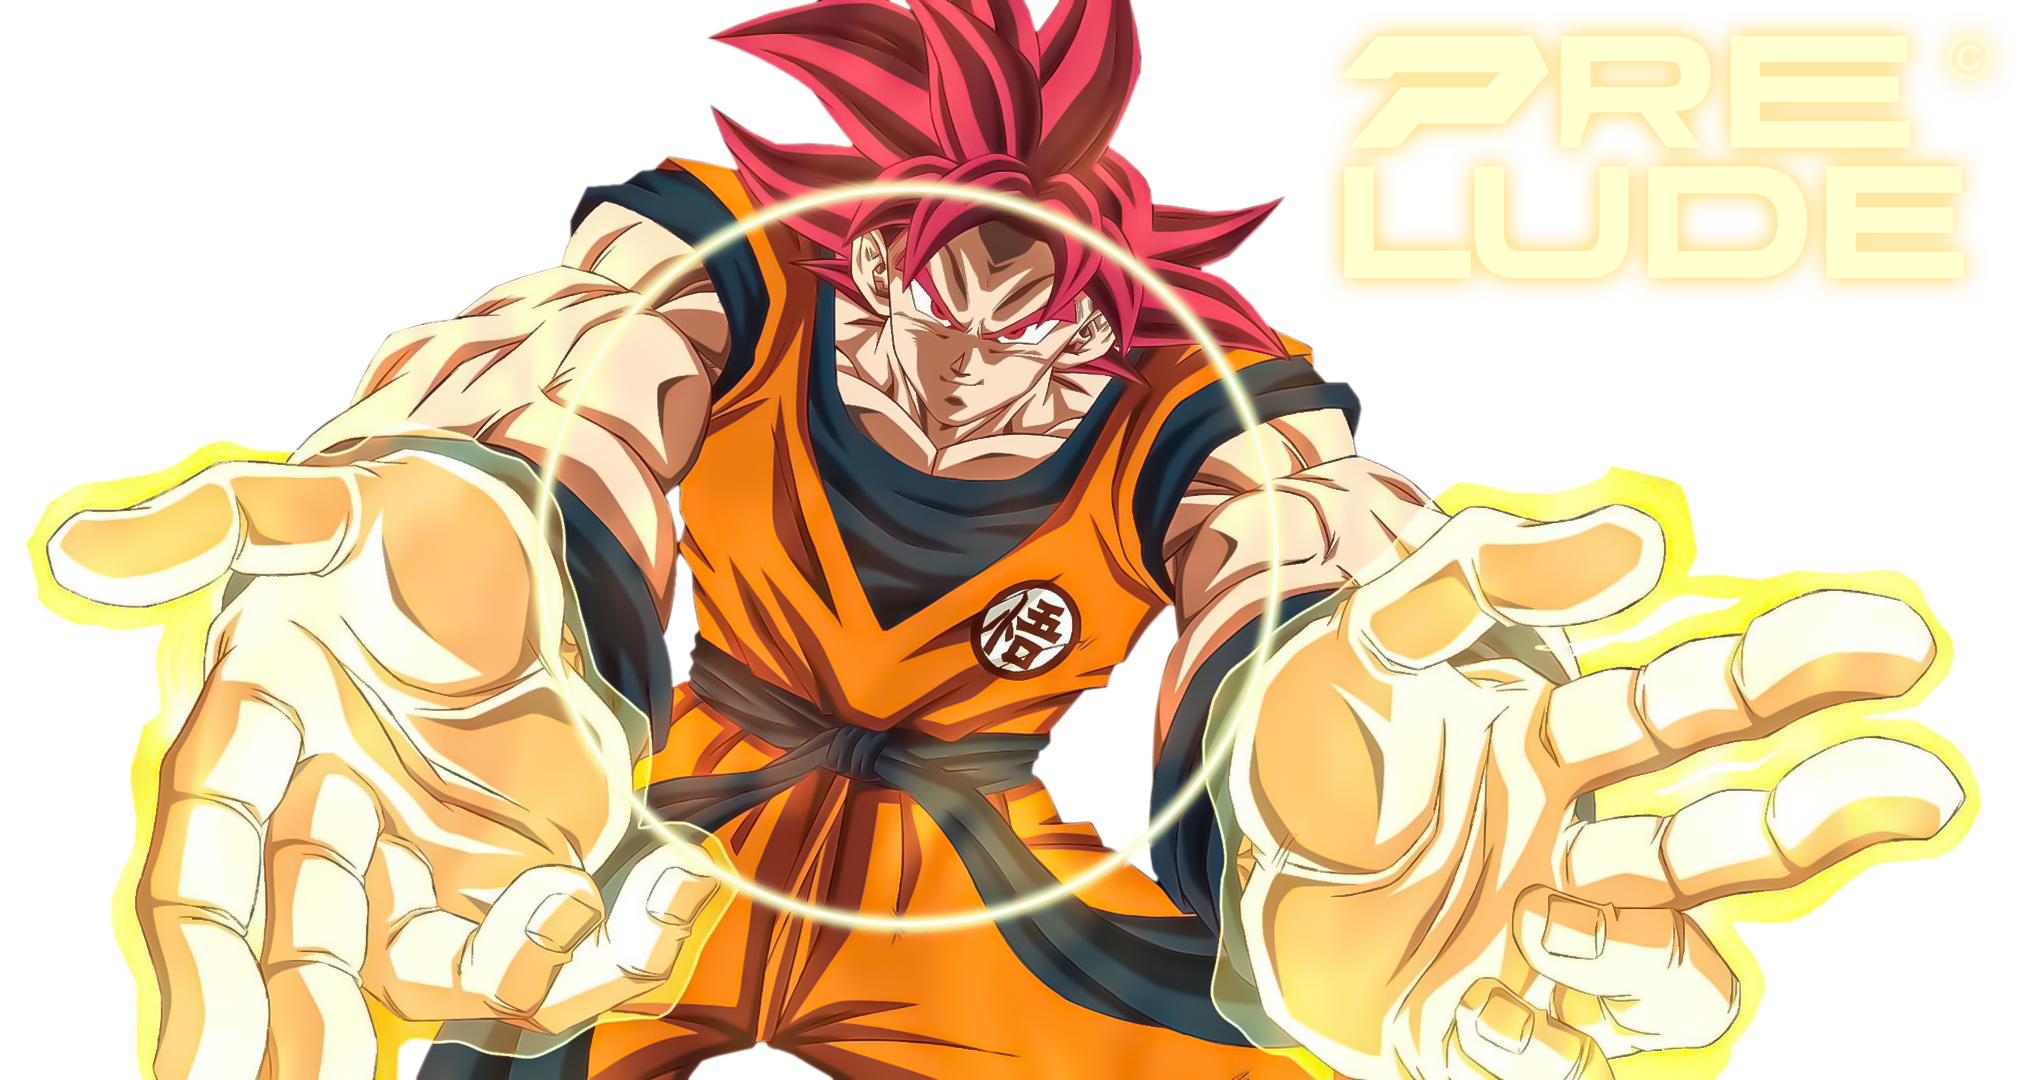 Goku Movie Dragon Ball Super Hero by SaoDVD on DeviantArt